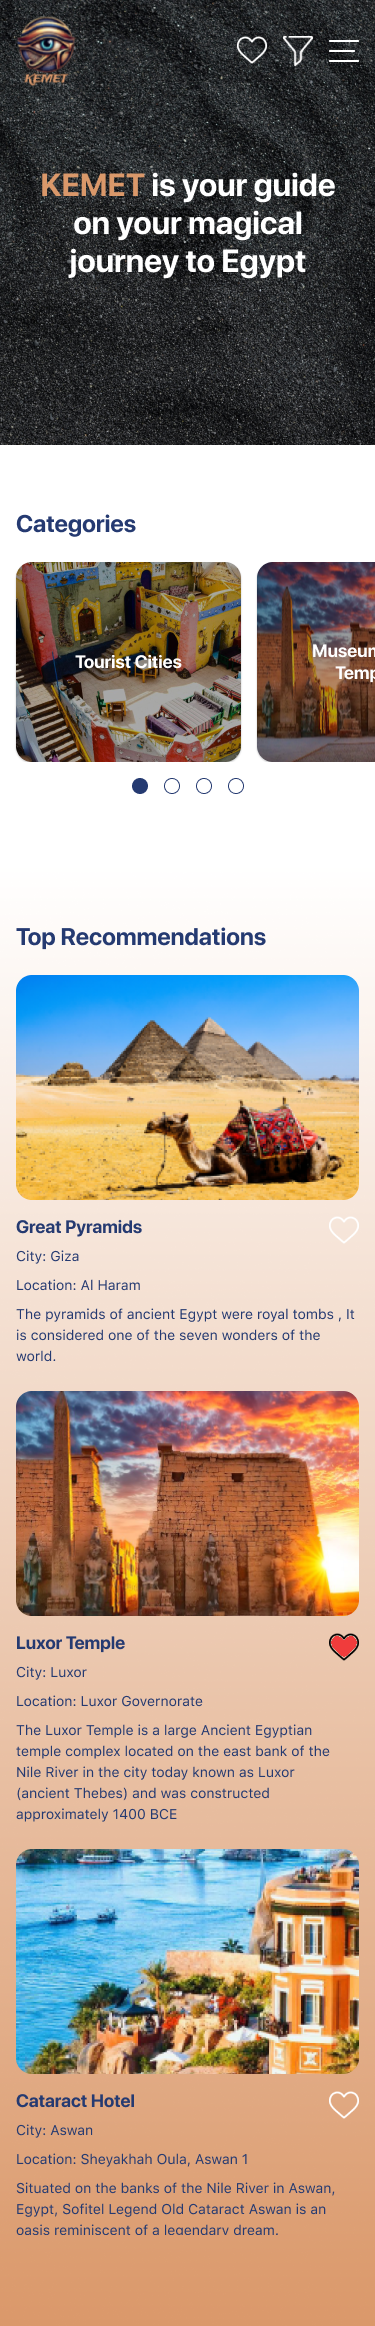 Mobile app ui design ux/ui tourism egypt PHARAONIC ancient egypt pyramids luxor tour